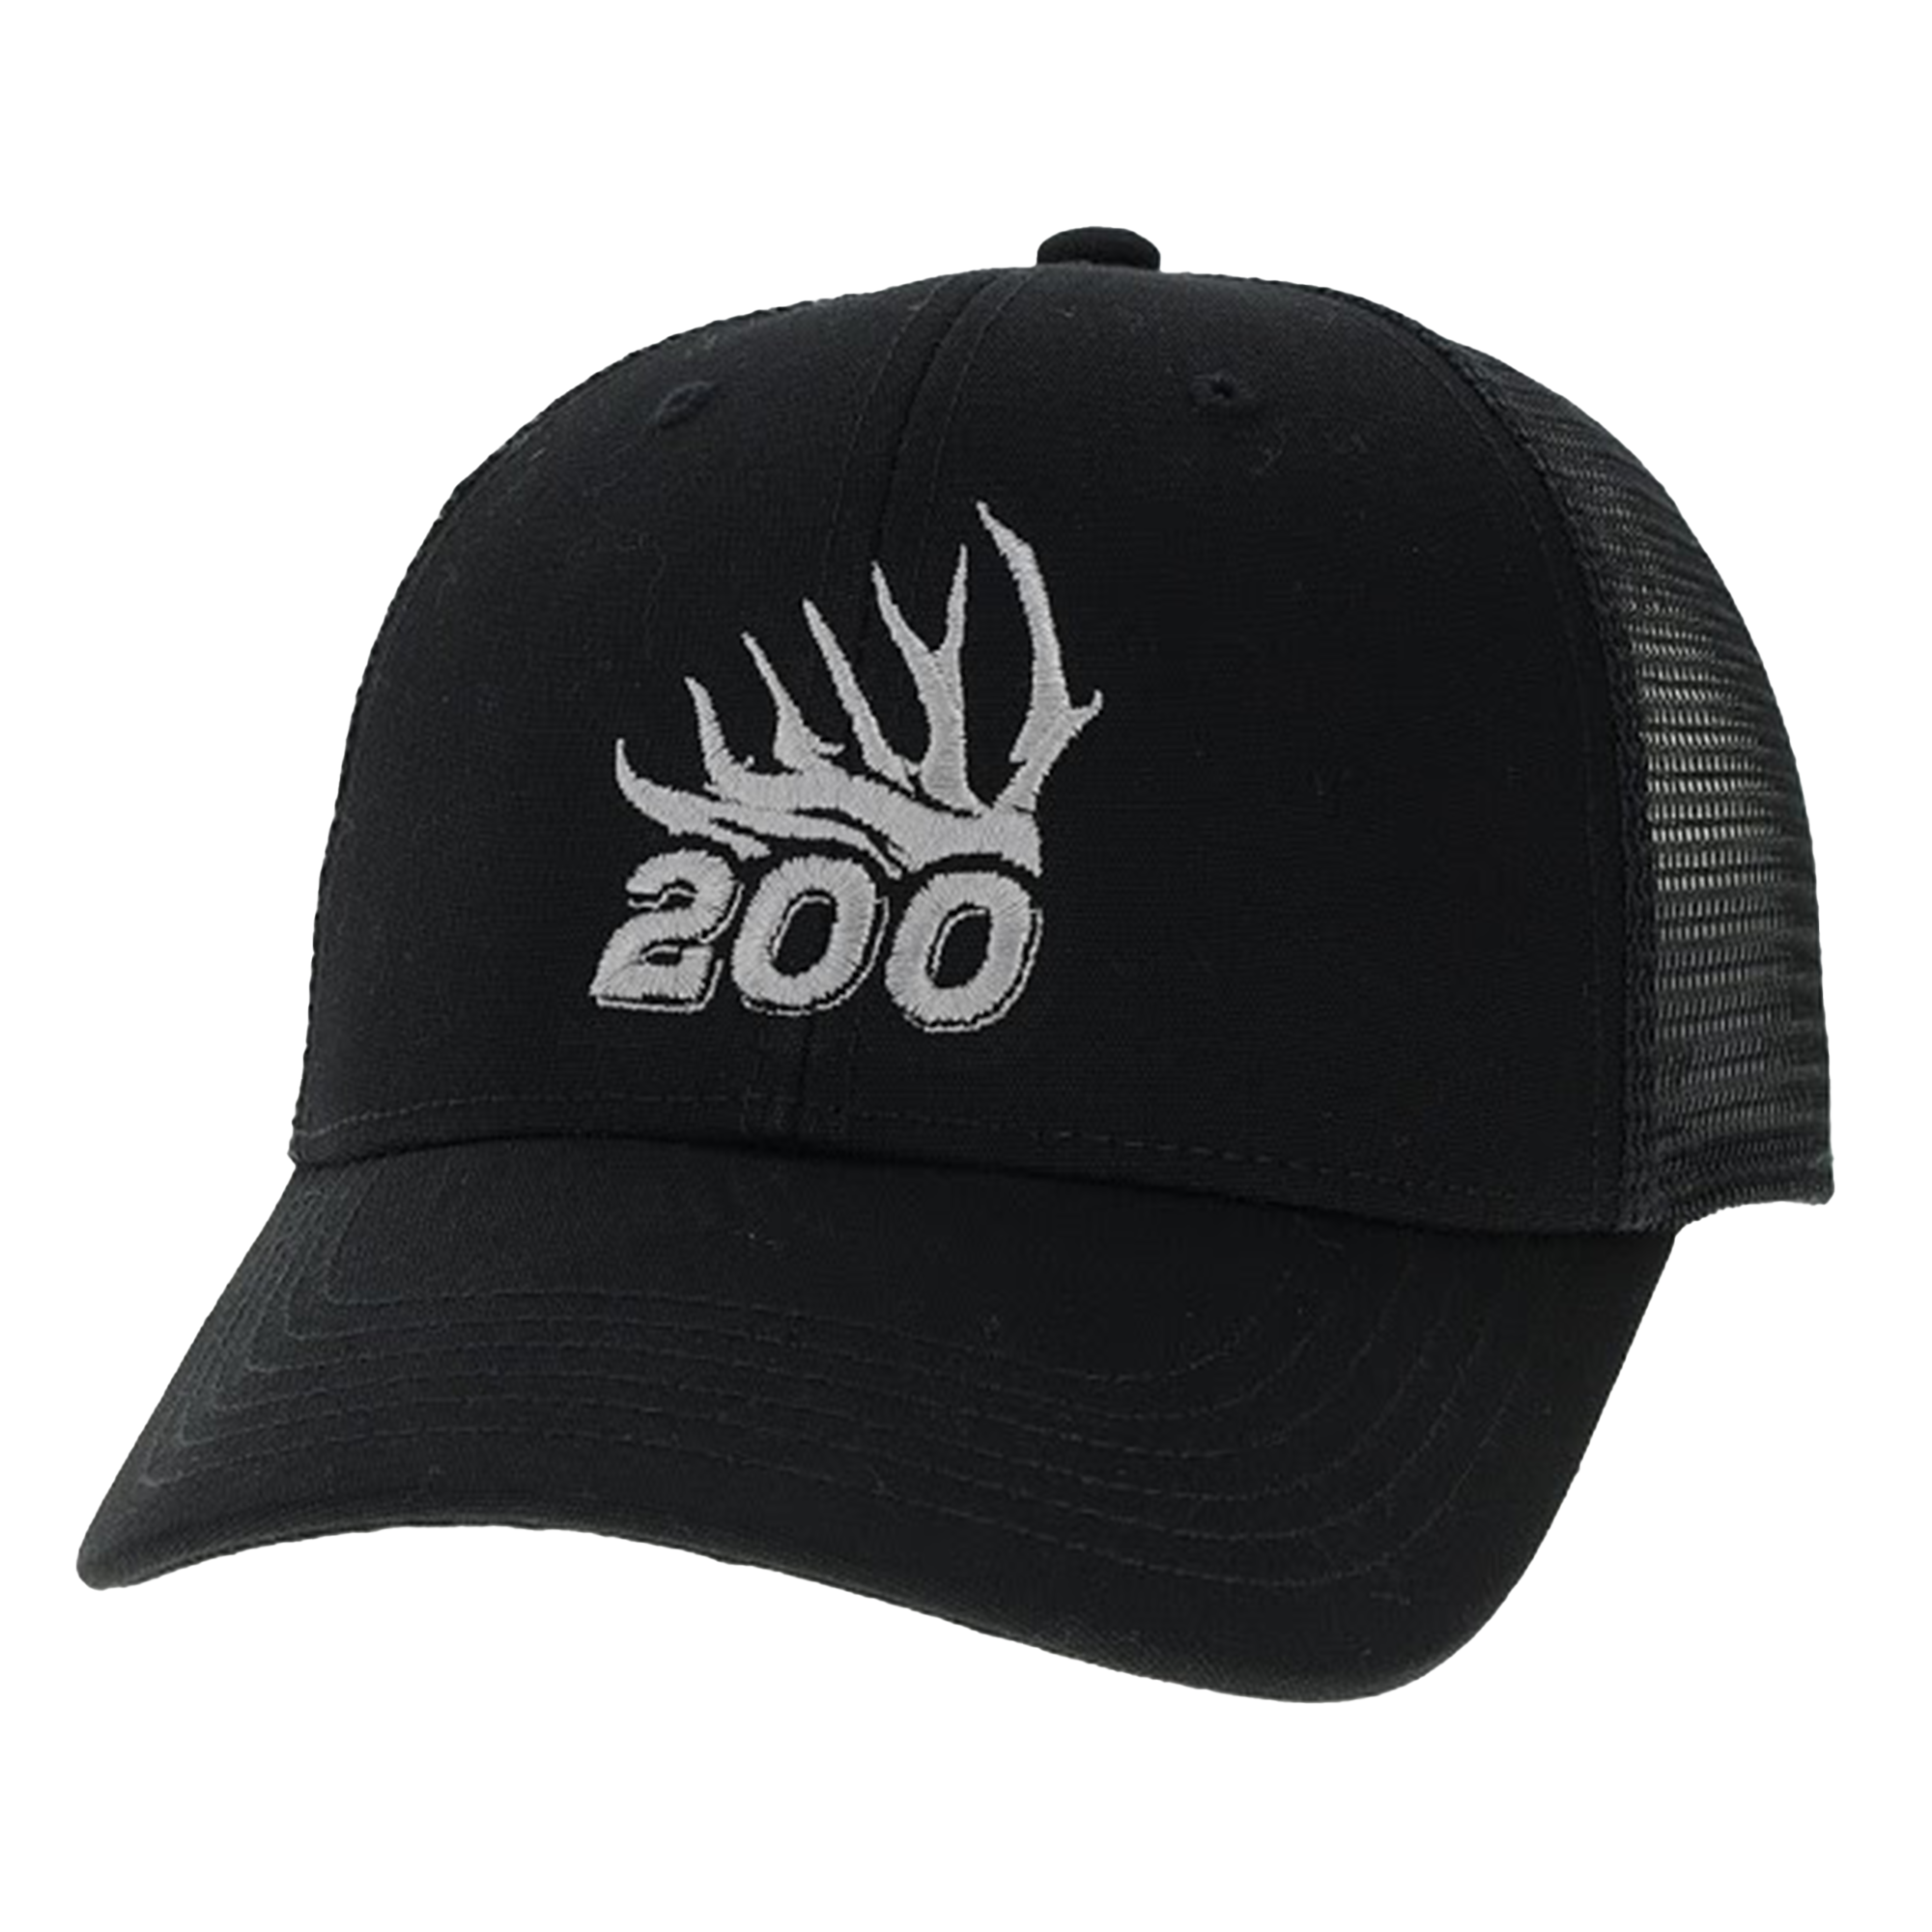 200 Black mesh Snapback with Grey logo